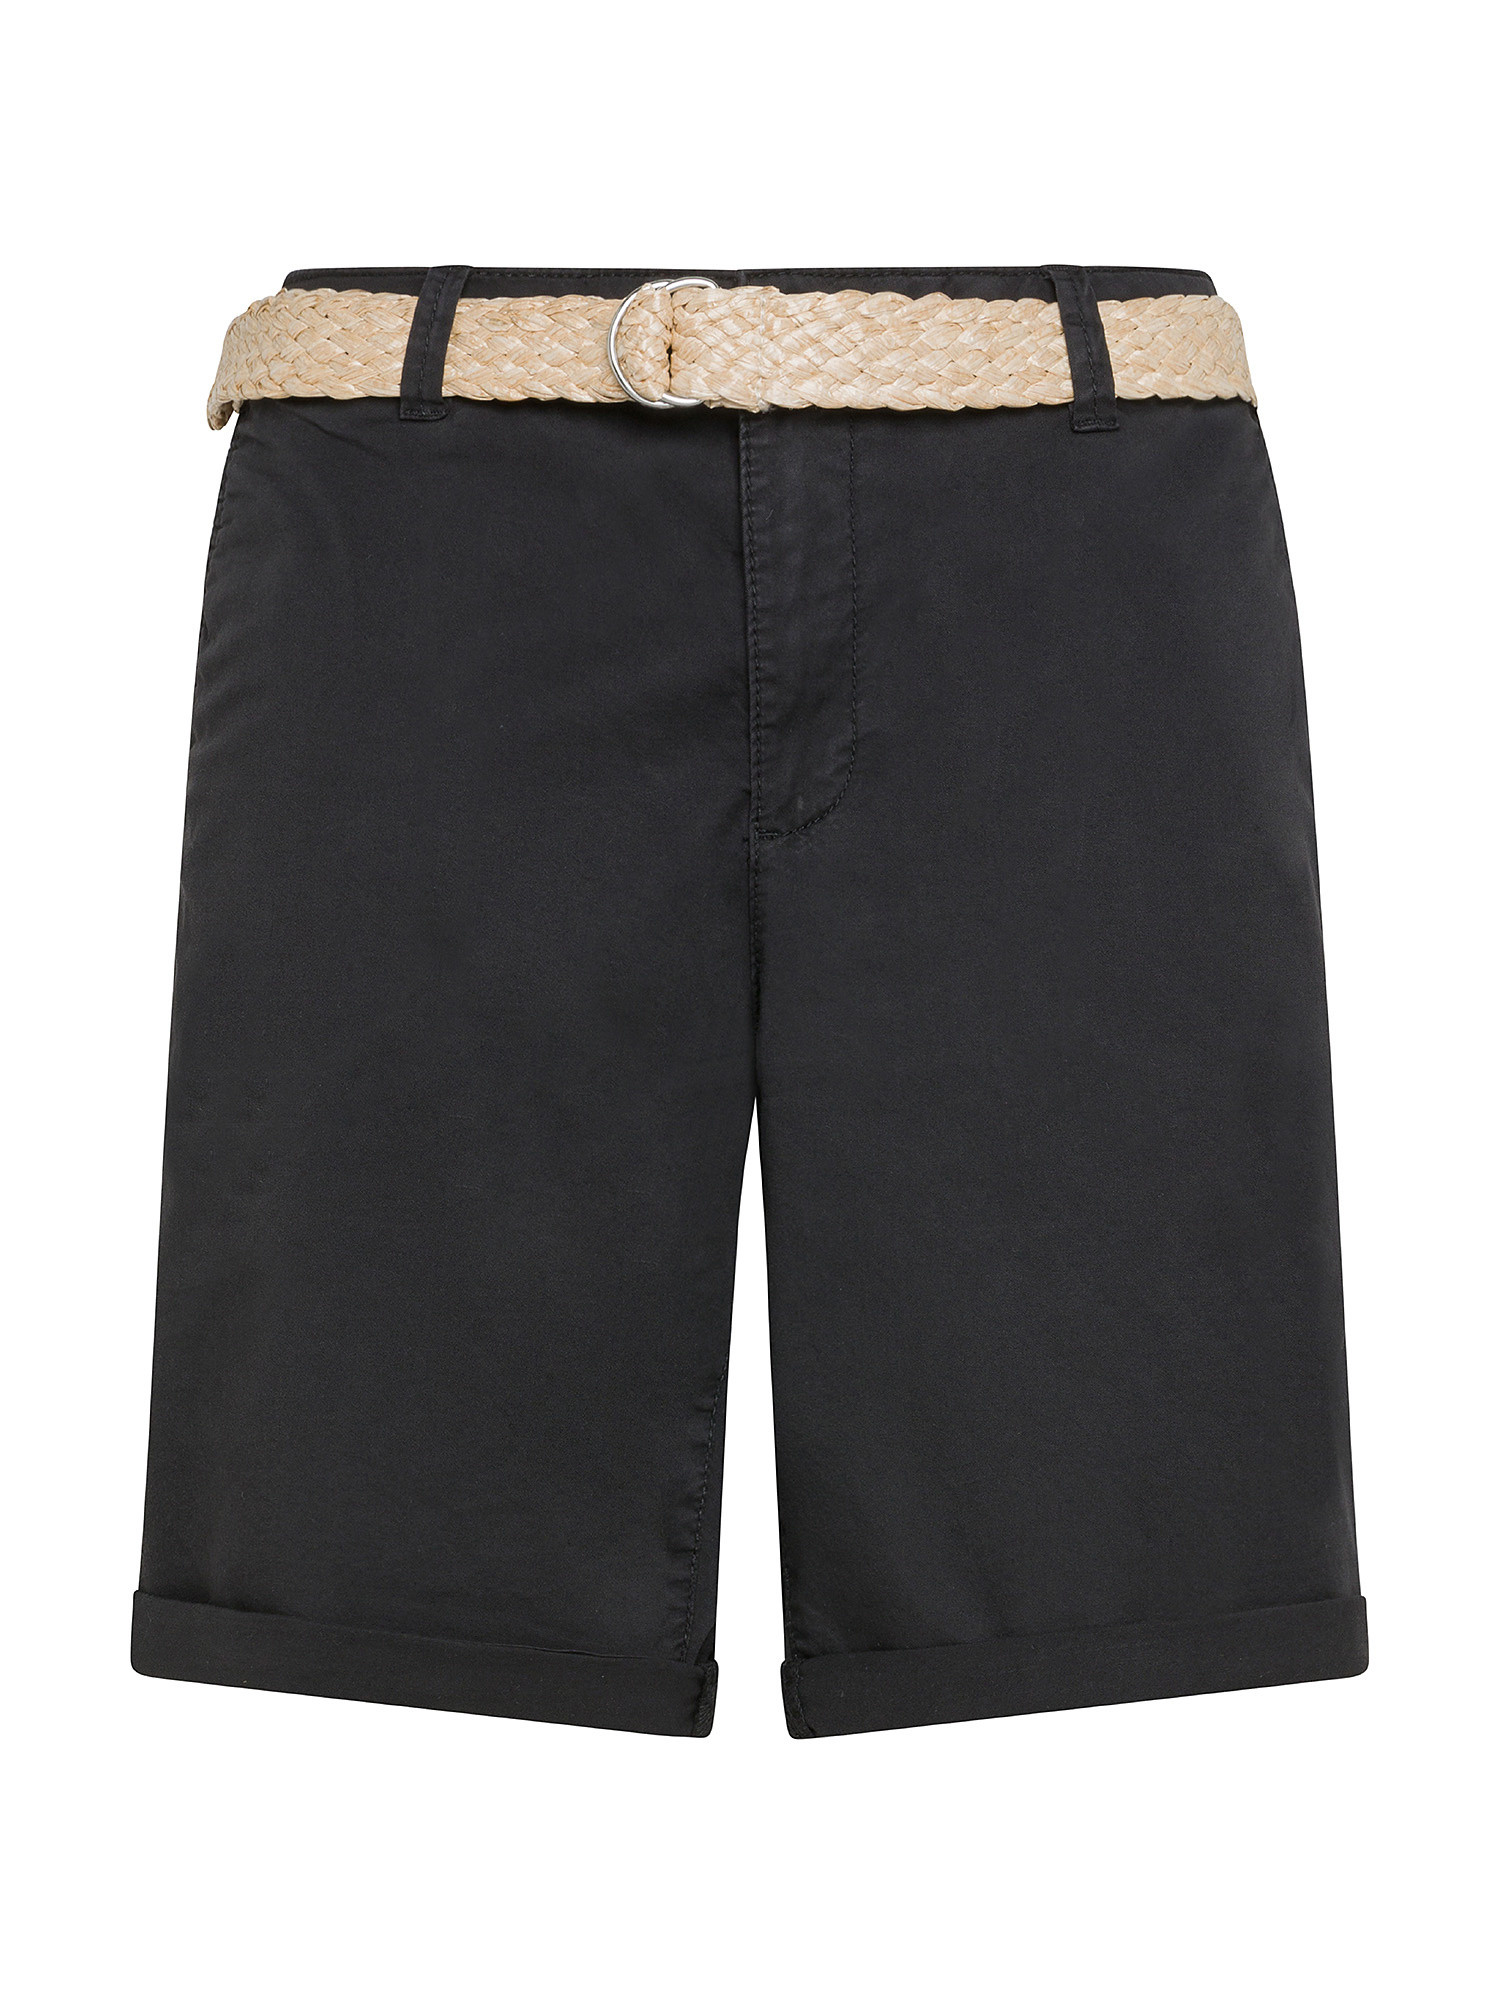 Esprit - Shorts with braided raffia belt, Black, large image number 0